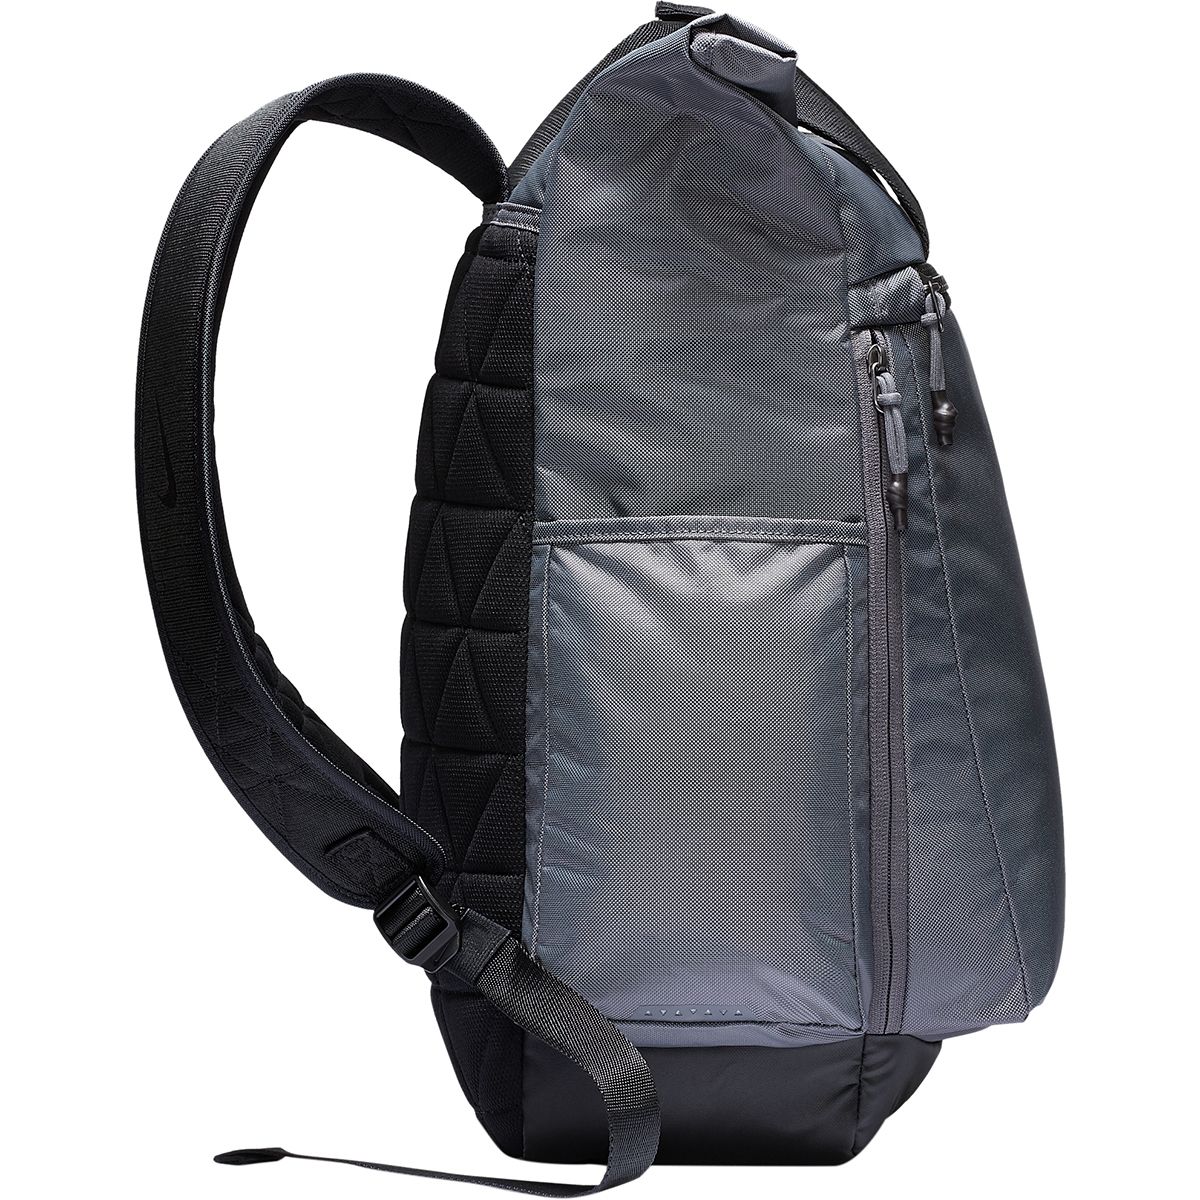 NWT Nike Vapor Power 2.0 Heathered Training Backpack School/Travel/Gym Bag